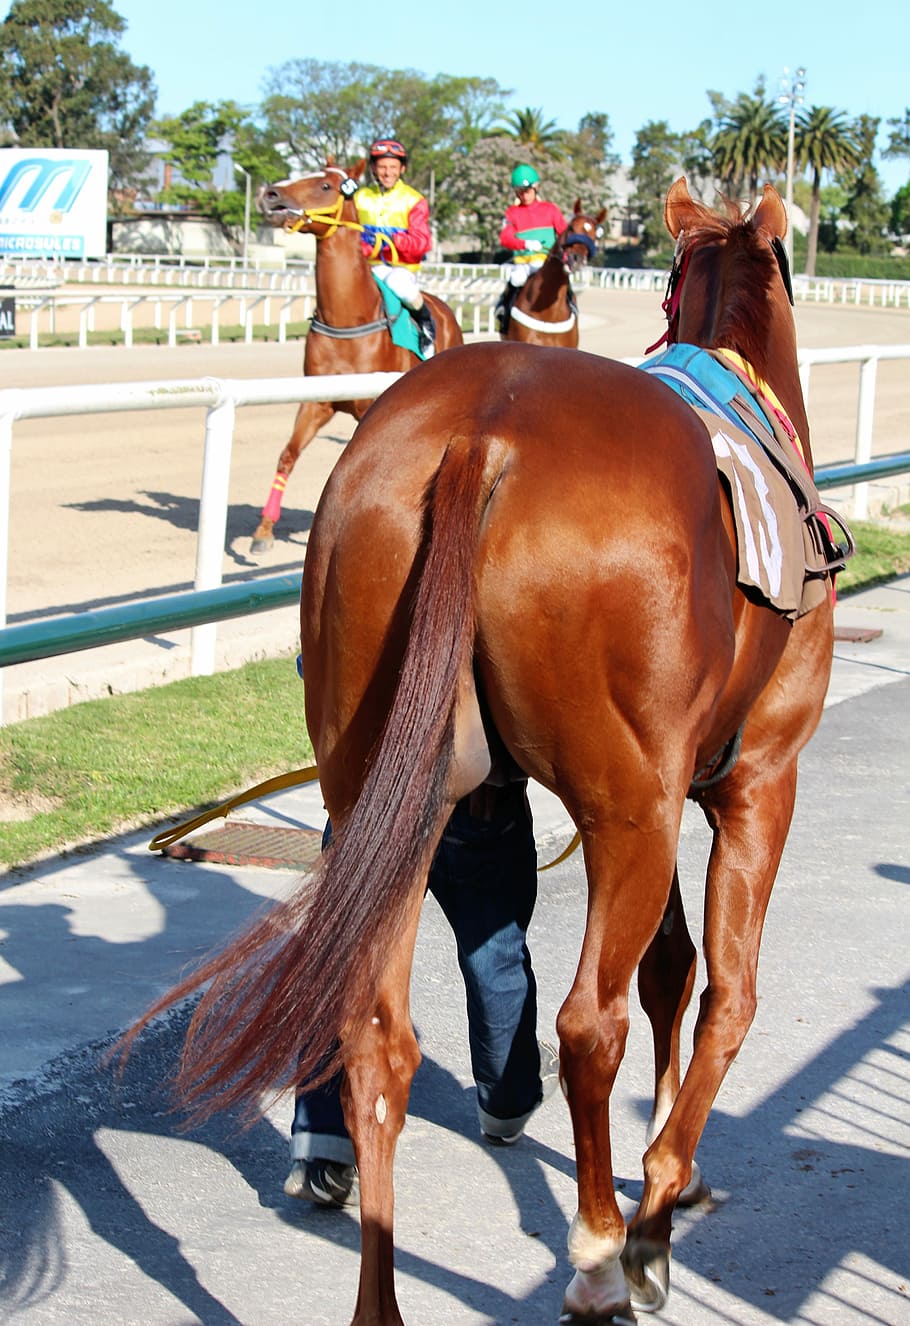 Horses, Horse Racing, Thoroughbreds, jockey, racehorse, horseback riding